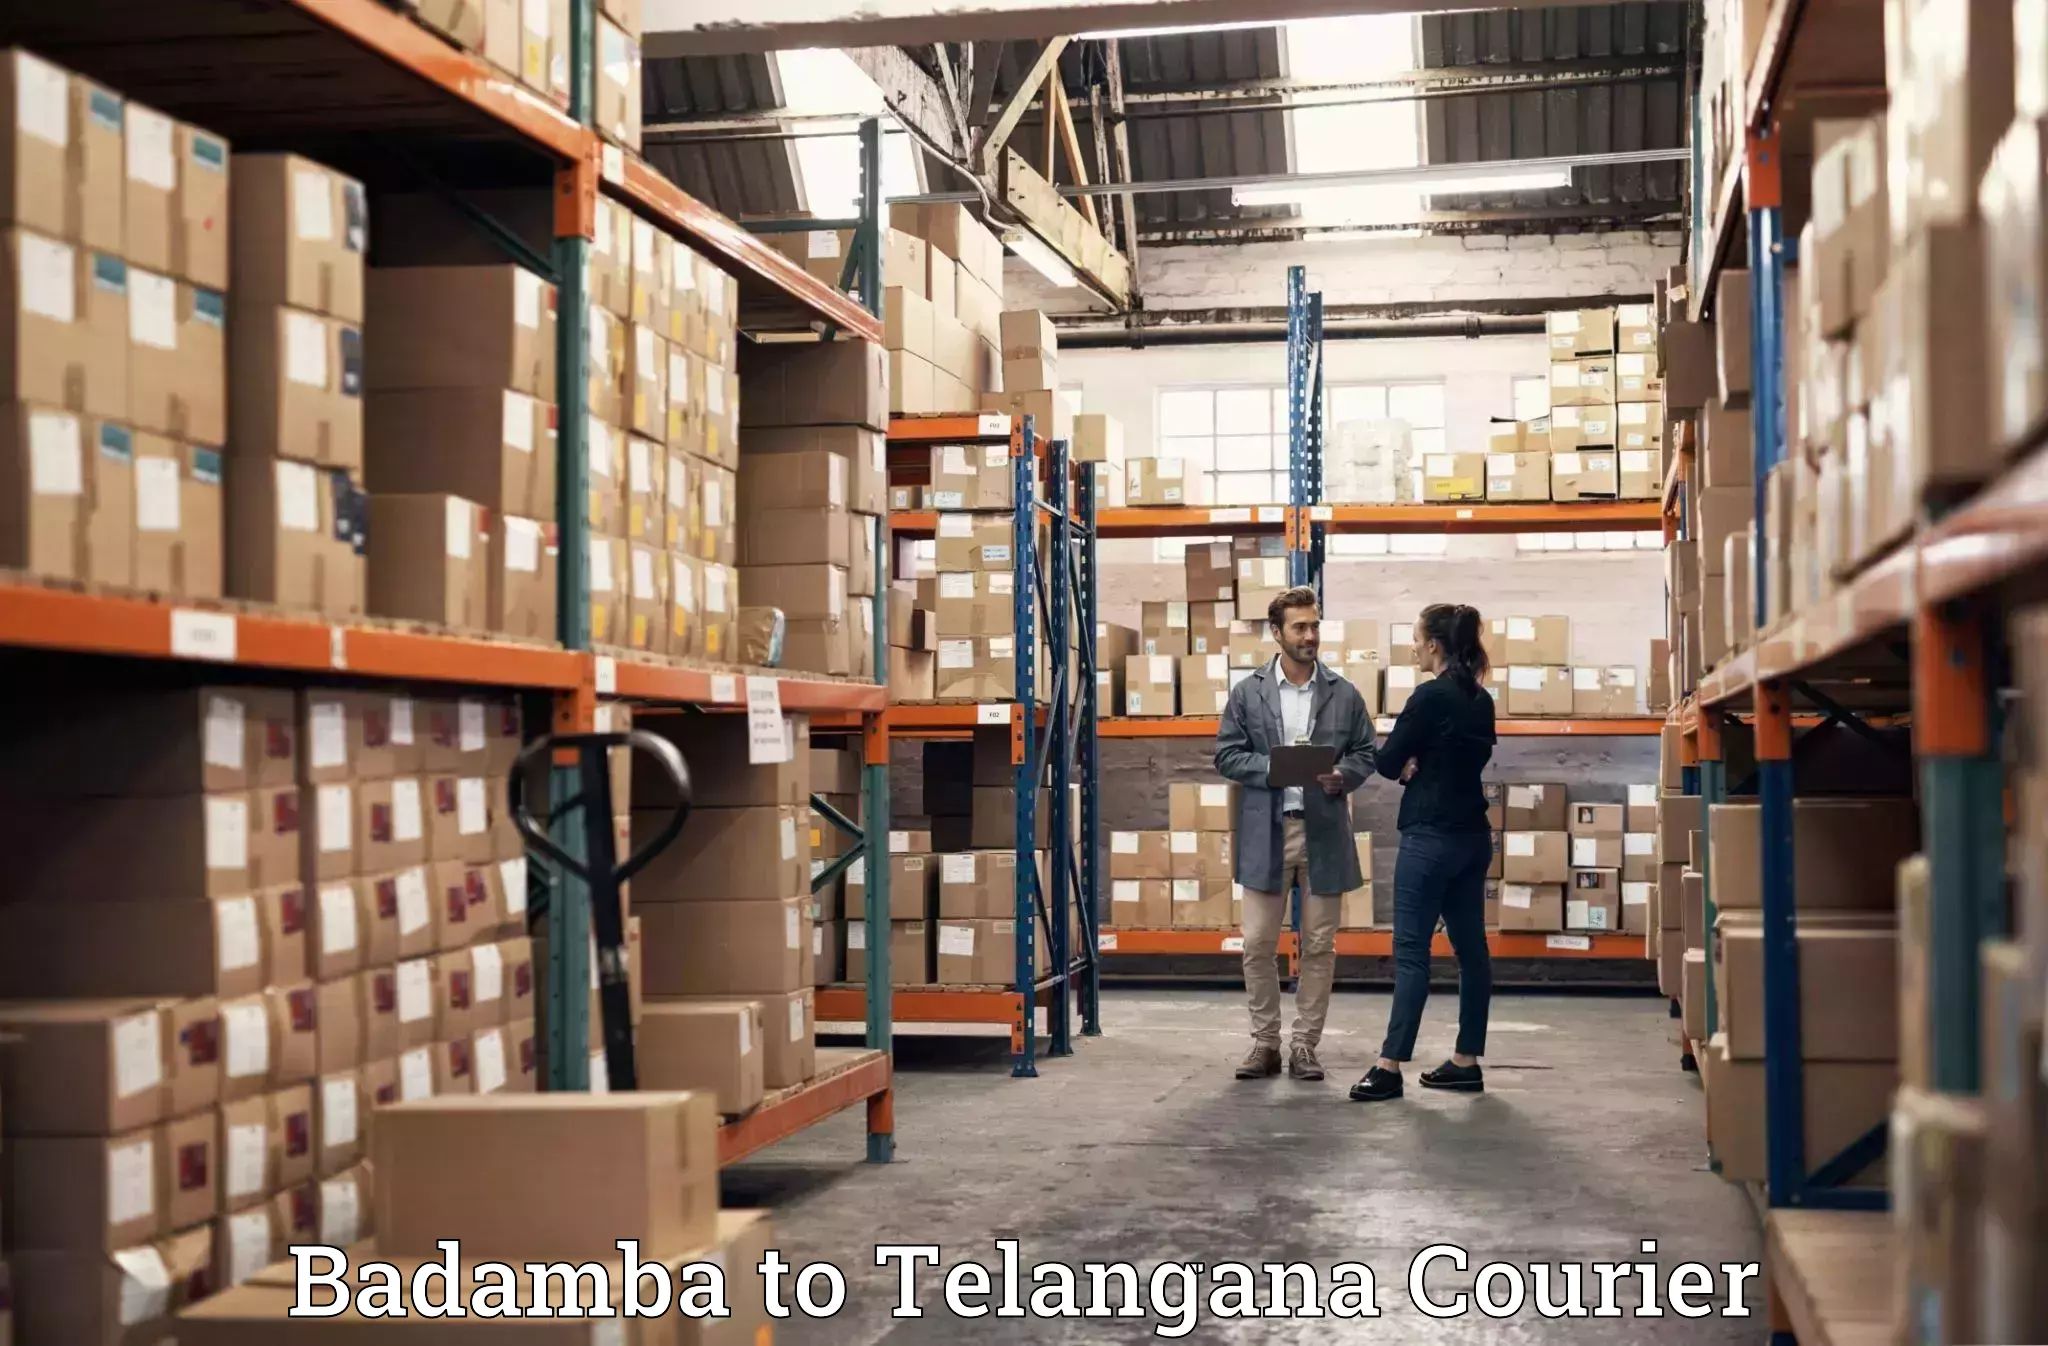 Moving and storage services in Badamba to Miryalaguda